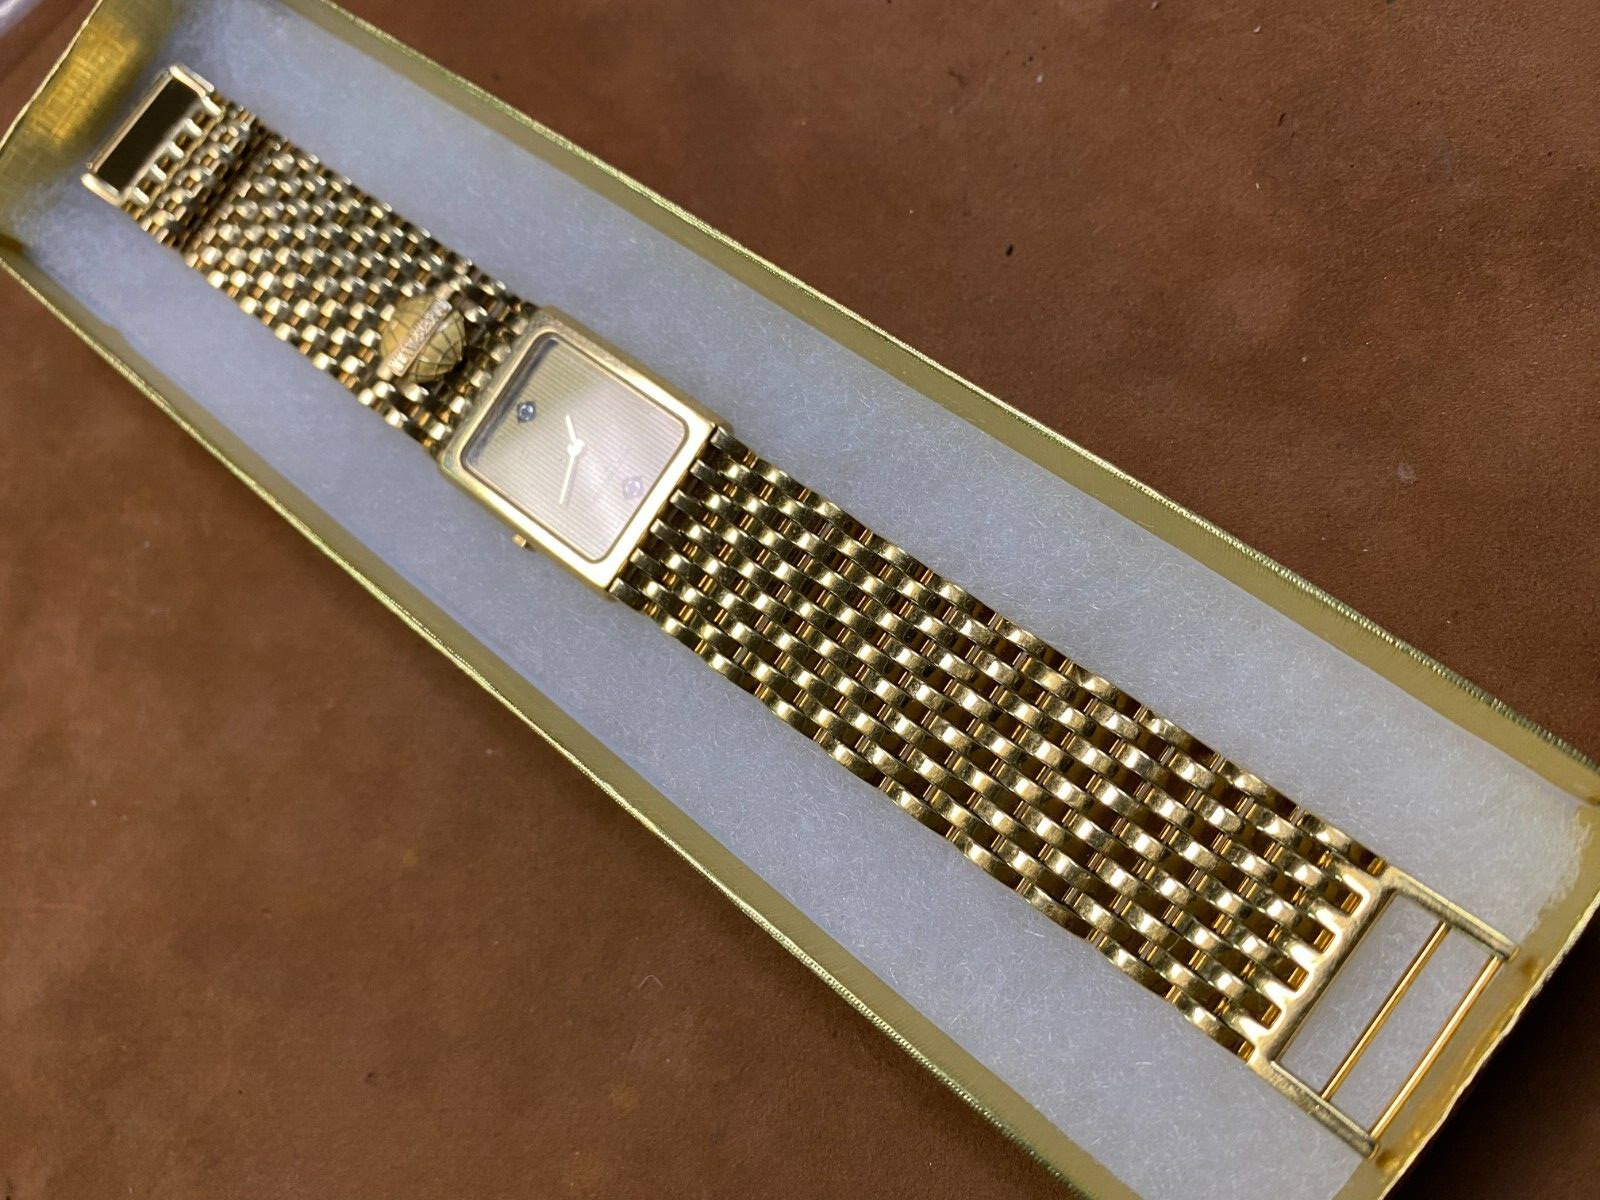 NICE 35 YEAR CATERPILLAR SERVICE Award  PIN 10K on Wrist Watch Witnauer  Working